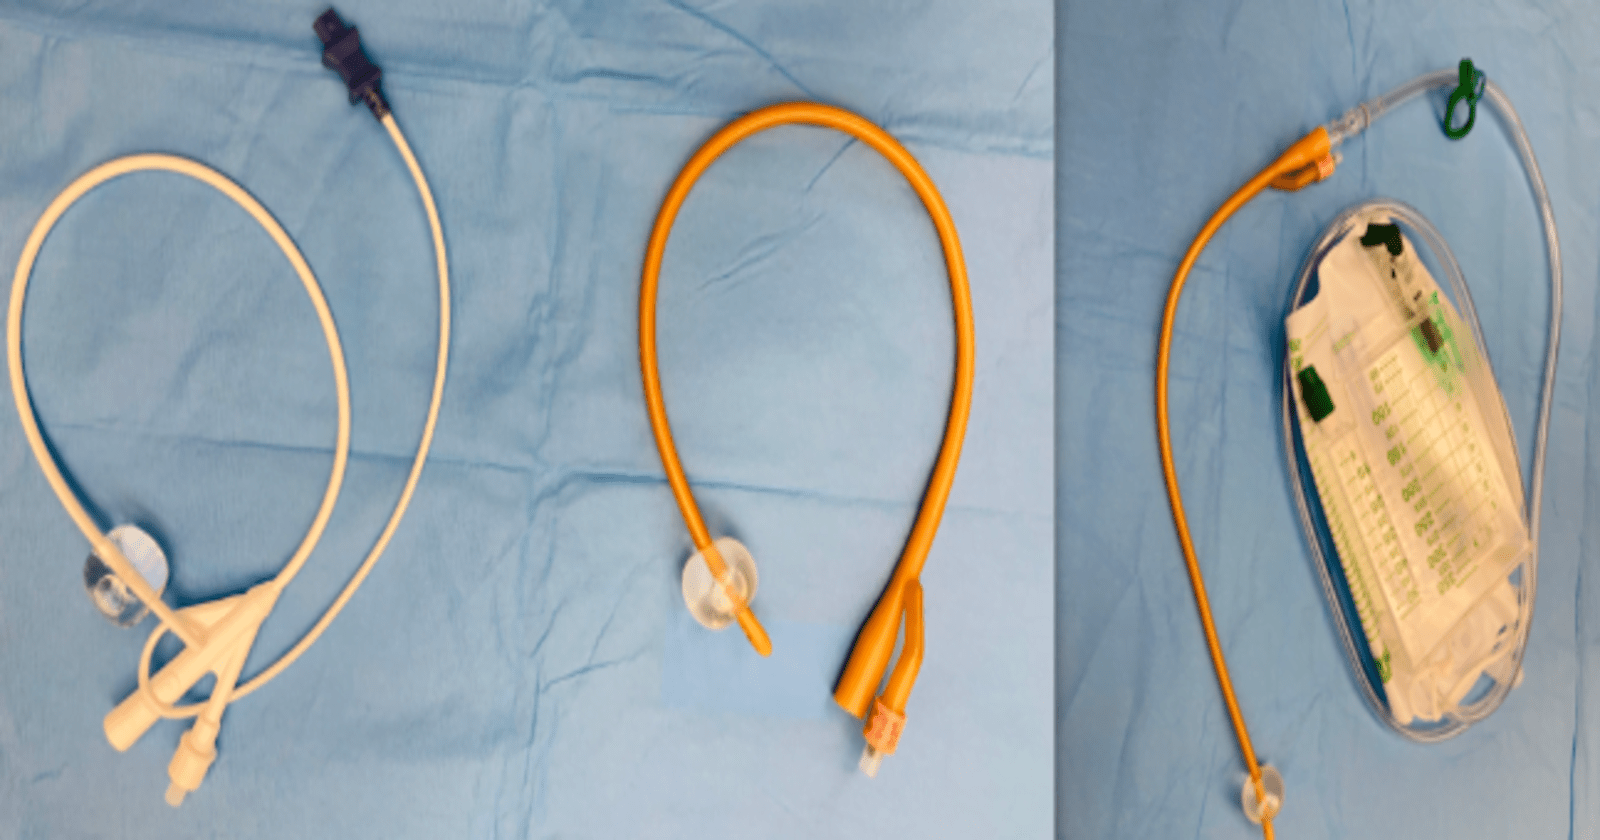 Indwelling Foley catheter vs Supra-pubic catheter